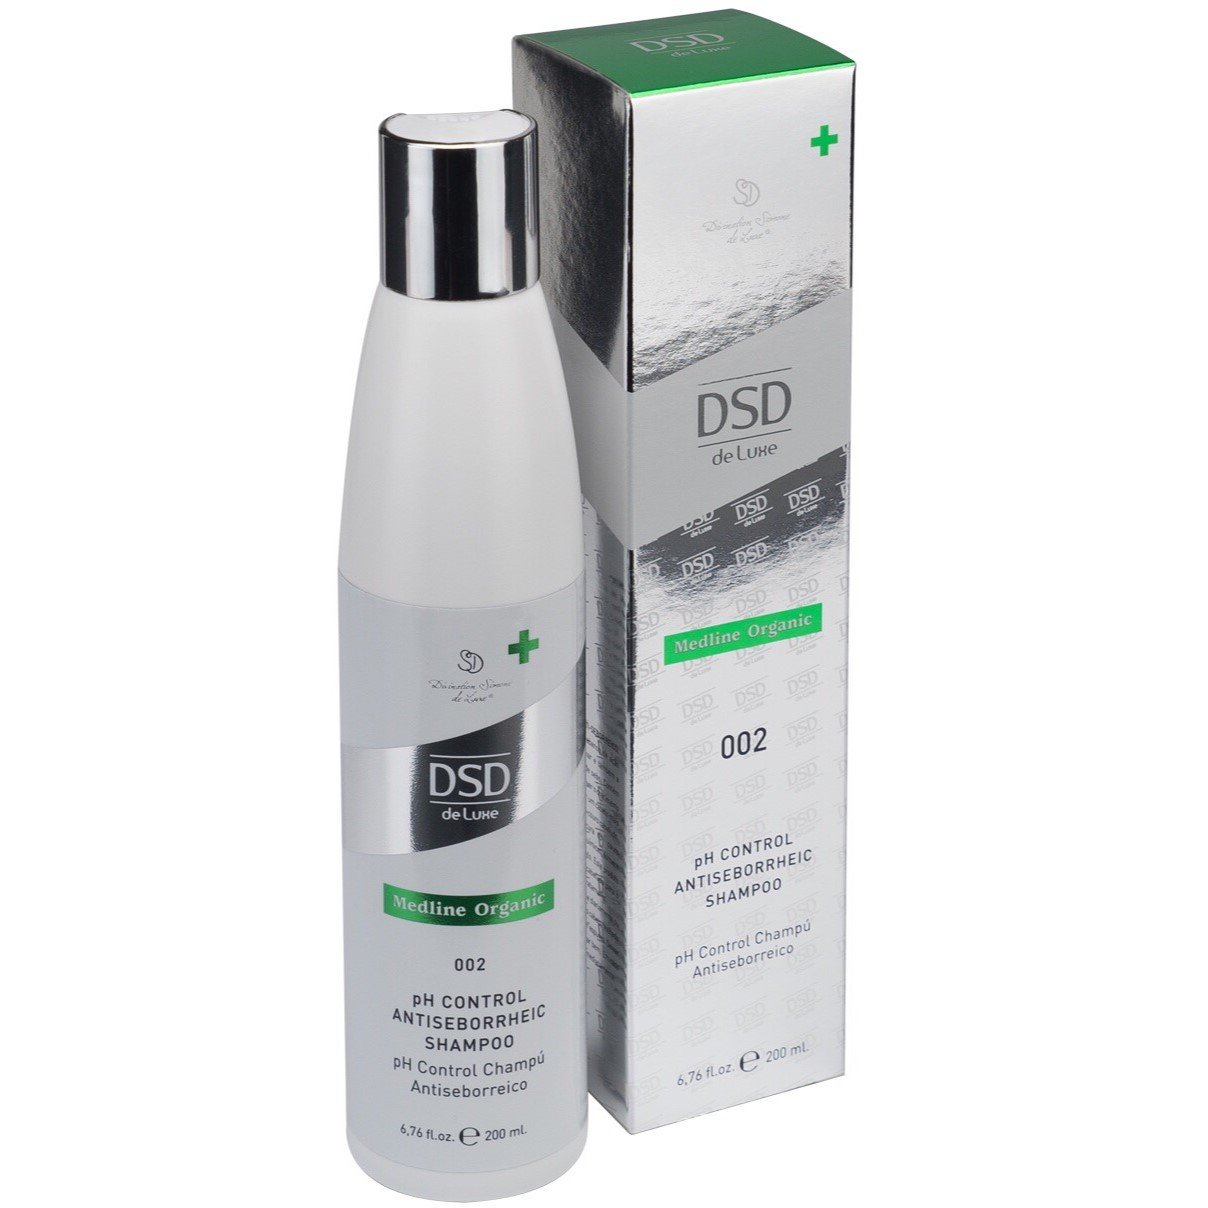 Антисеборейный шампунь DSD de Luxe 002 Medline Organic pH Control Antiseborrheic Shampoo, 200 мл - фото 1